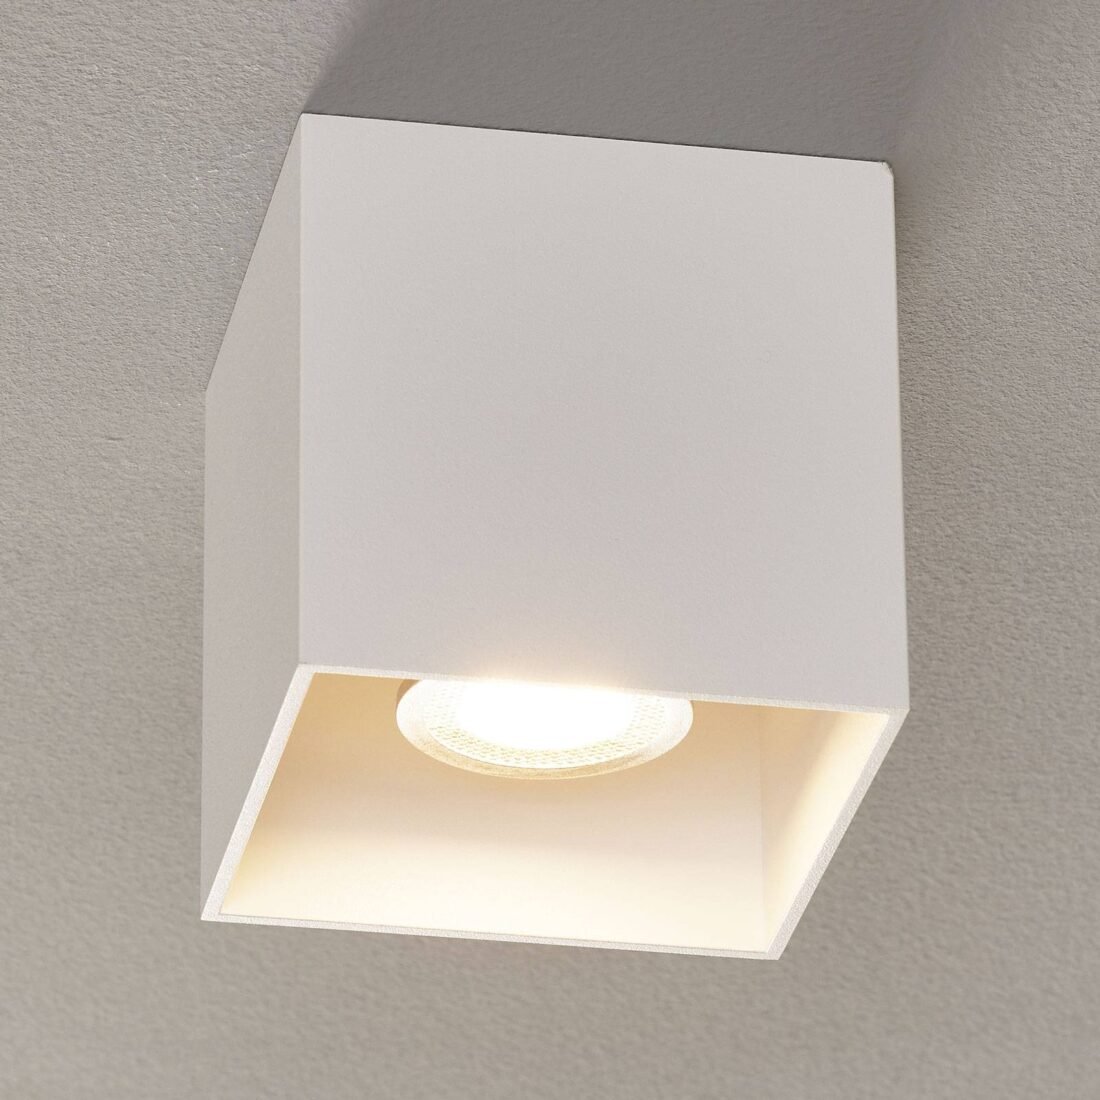 Wever & Ducré Lighting WEVER DUCRÉ Box 1.0 PAR16 stropní svítidlo bílé barvy